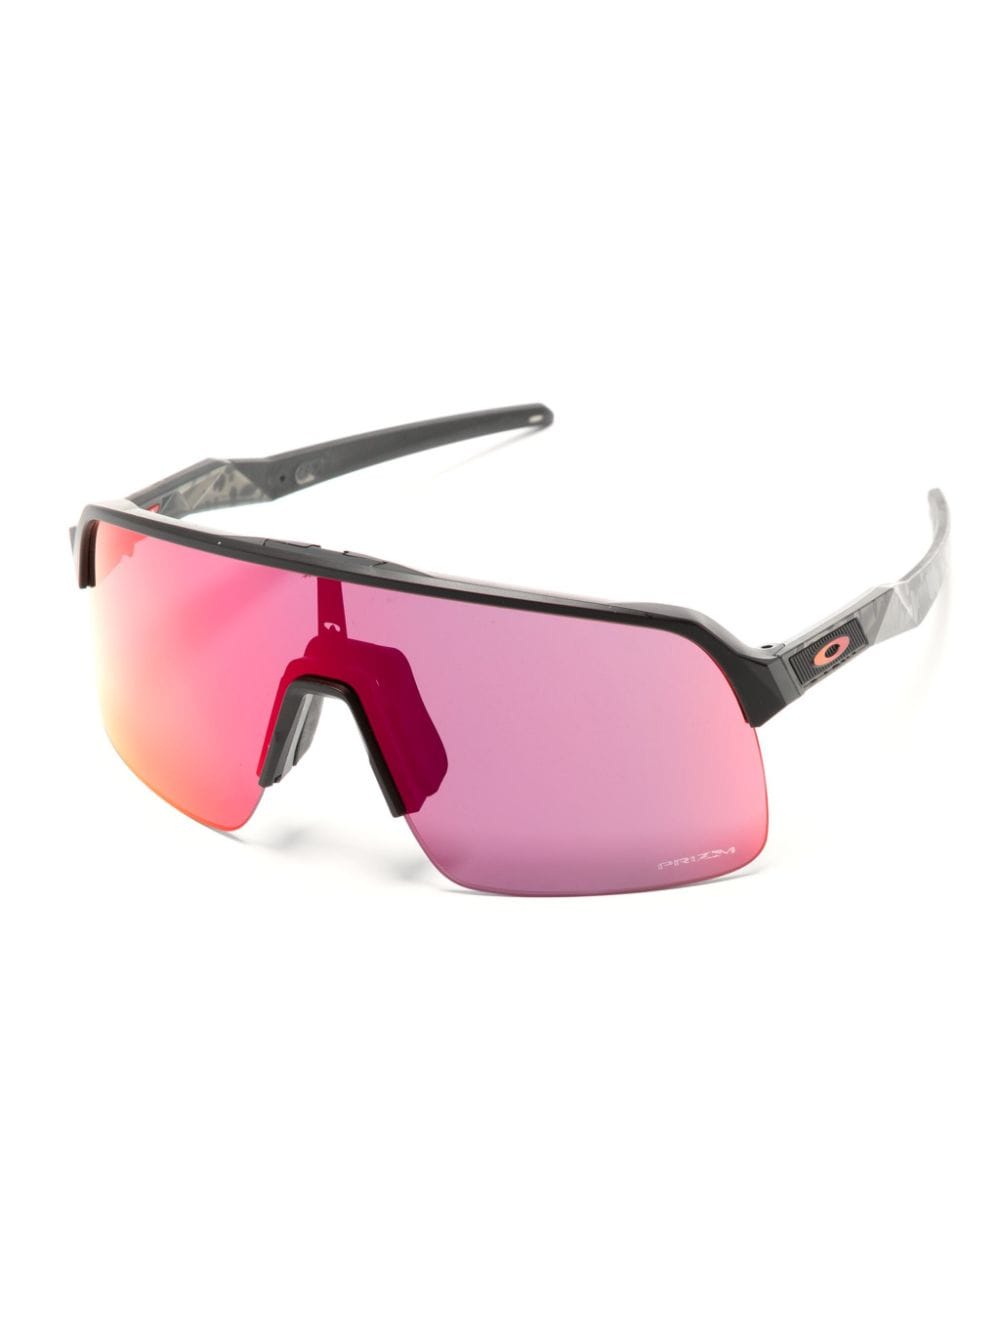 OO9463 shield-frame sunglasses<BR/><BR/><BR/>